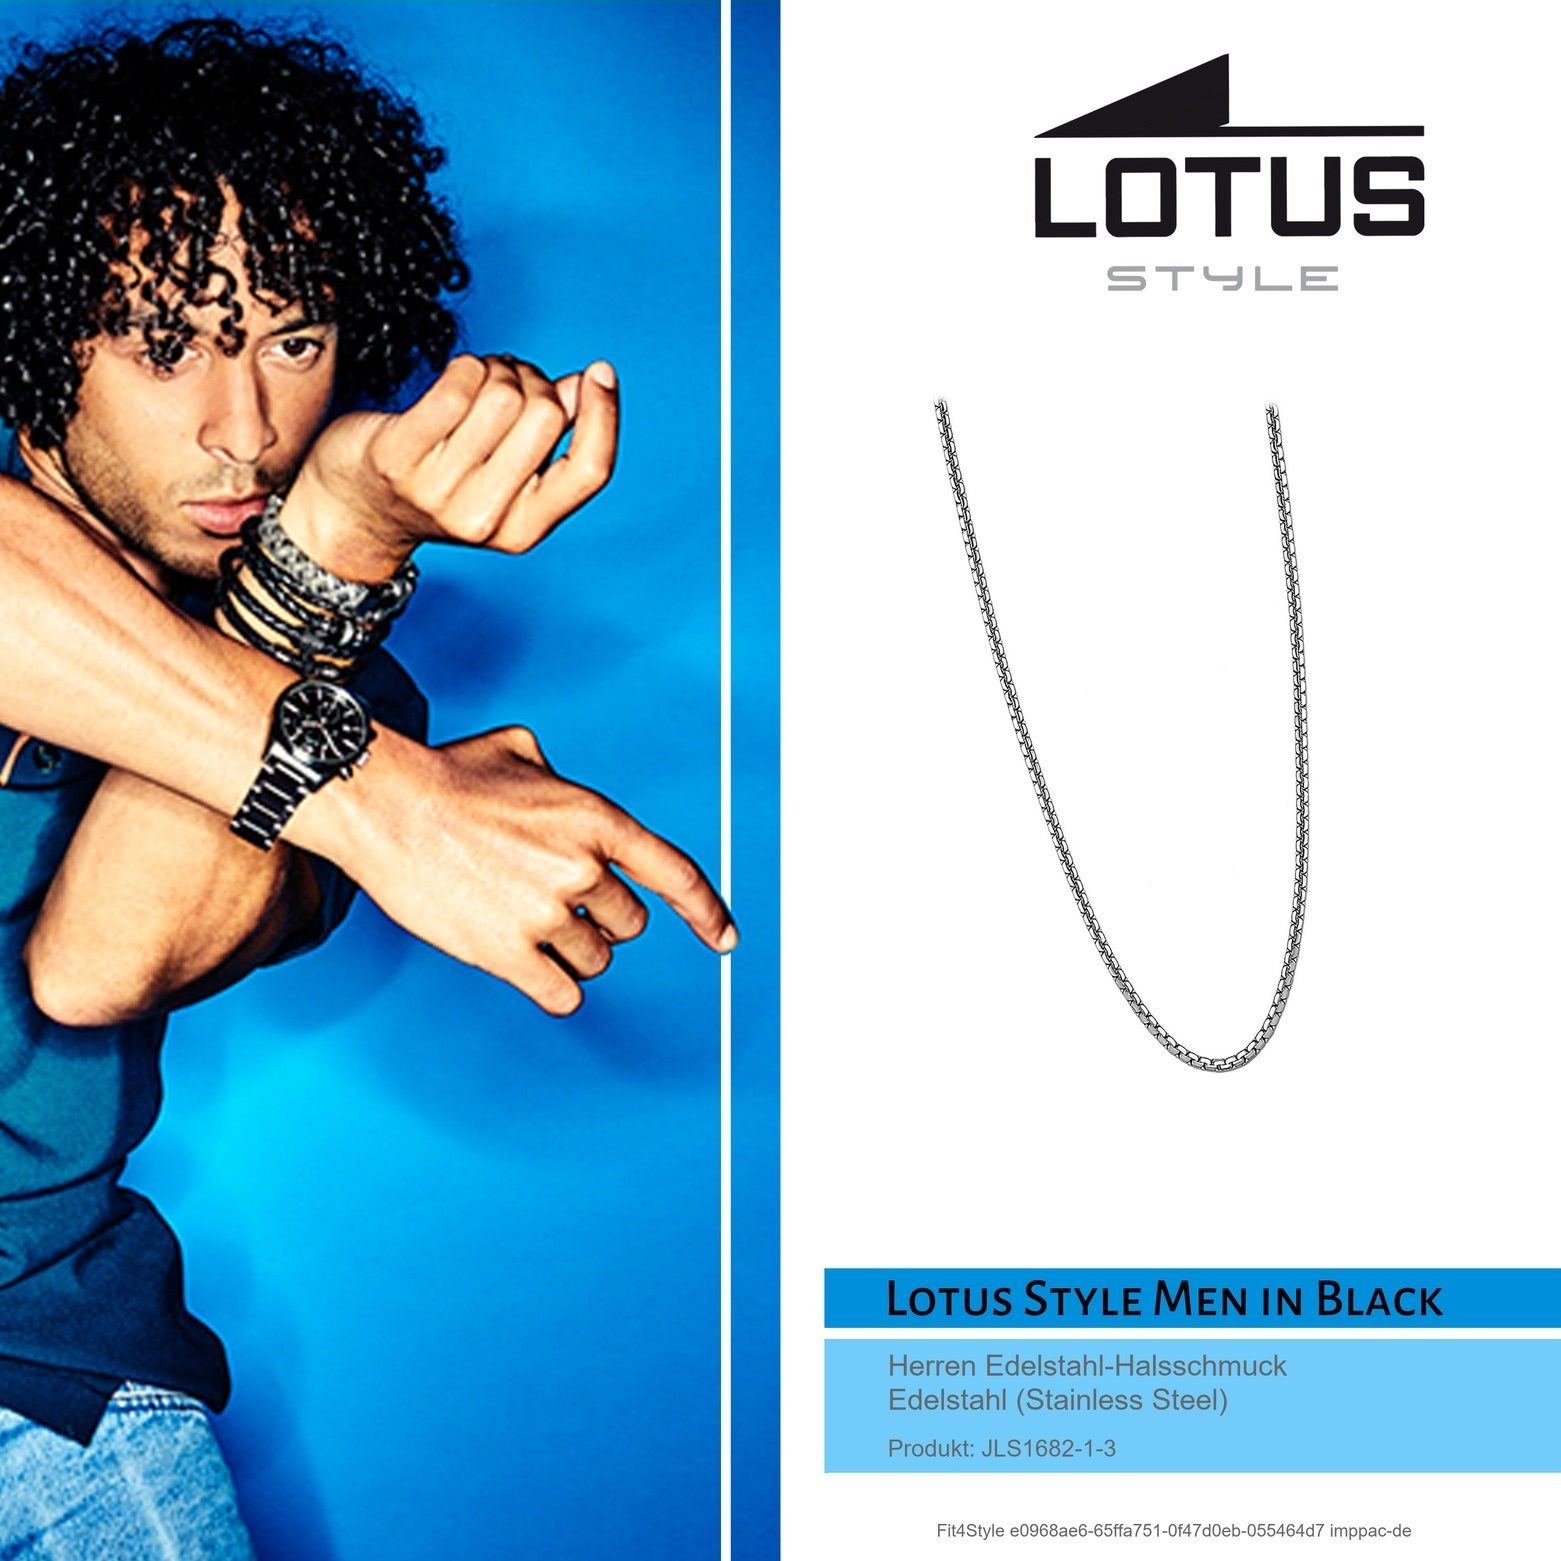 für Steel) Edelstahl Style Herren Lotus Style (Stainless (Halskette), Halskette Halsketten Edelstahlkette Lotus silber